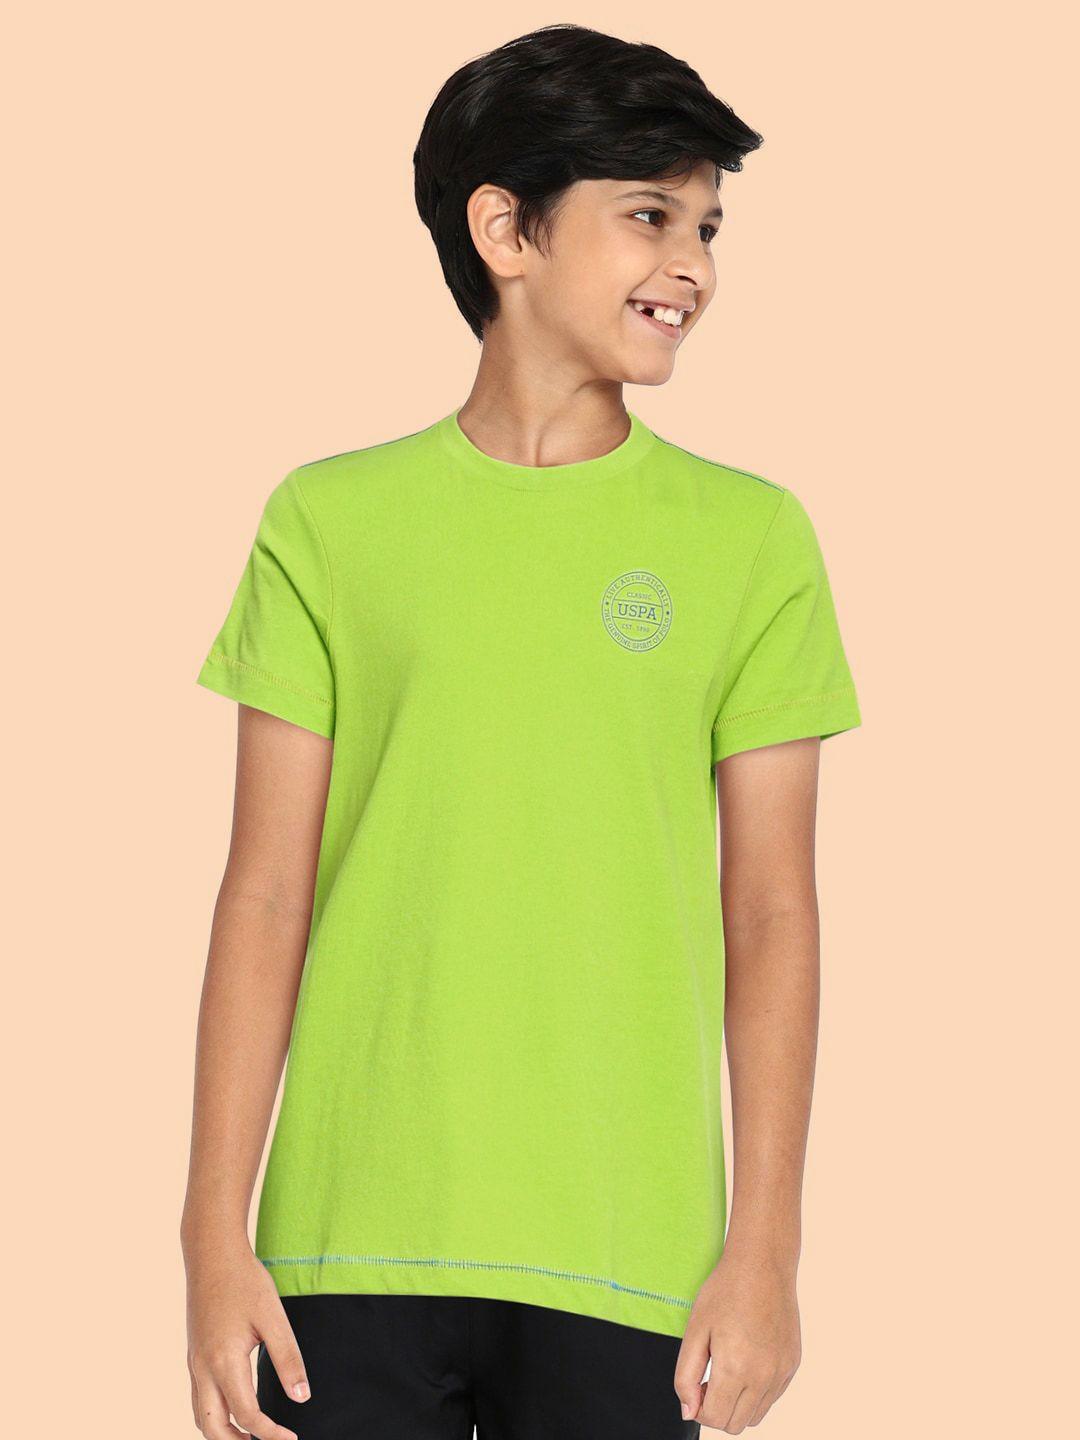 u.s. polo assn. kids boys lime green solid pure cotton lounge t-shirt